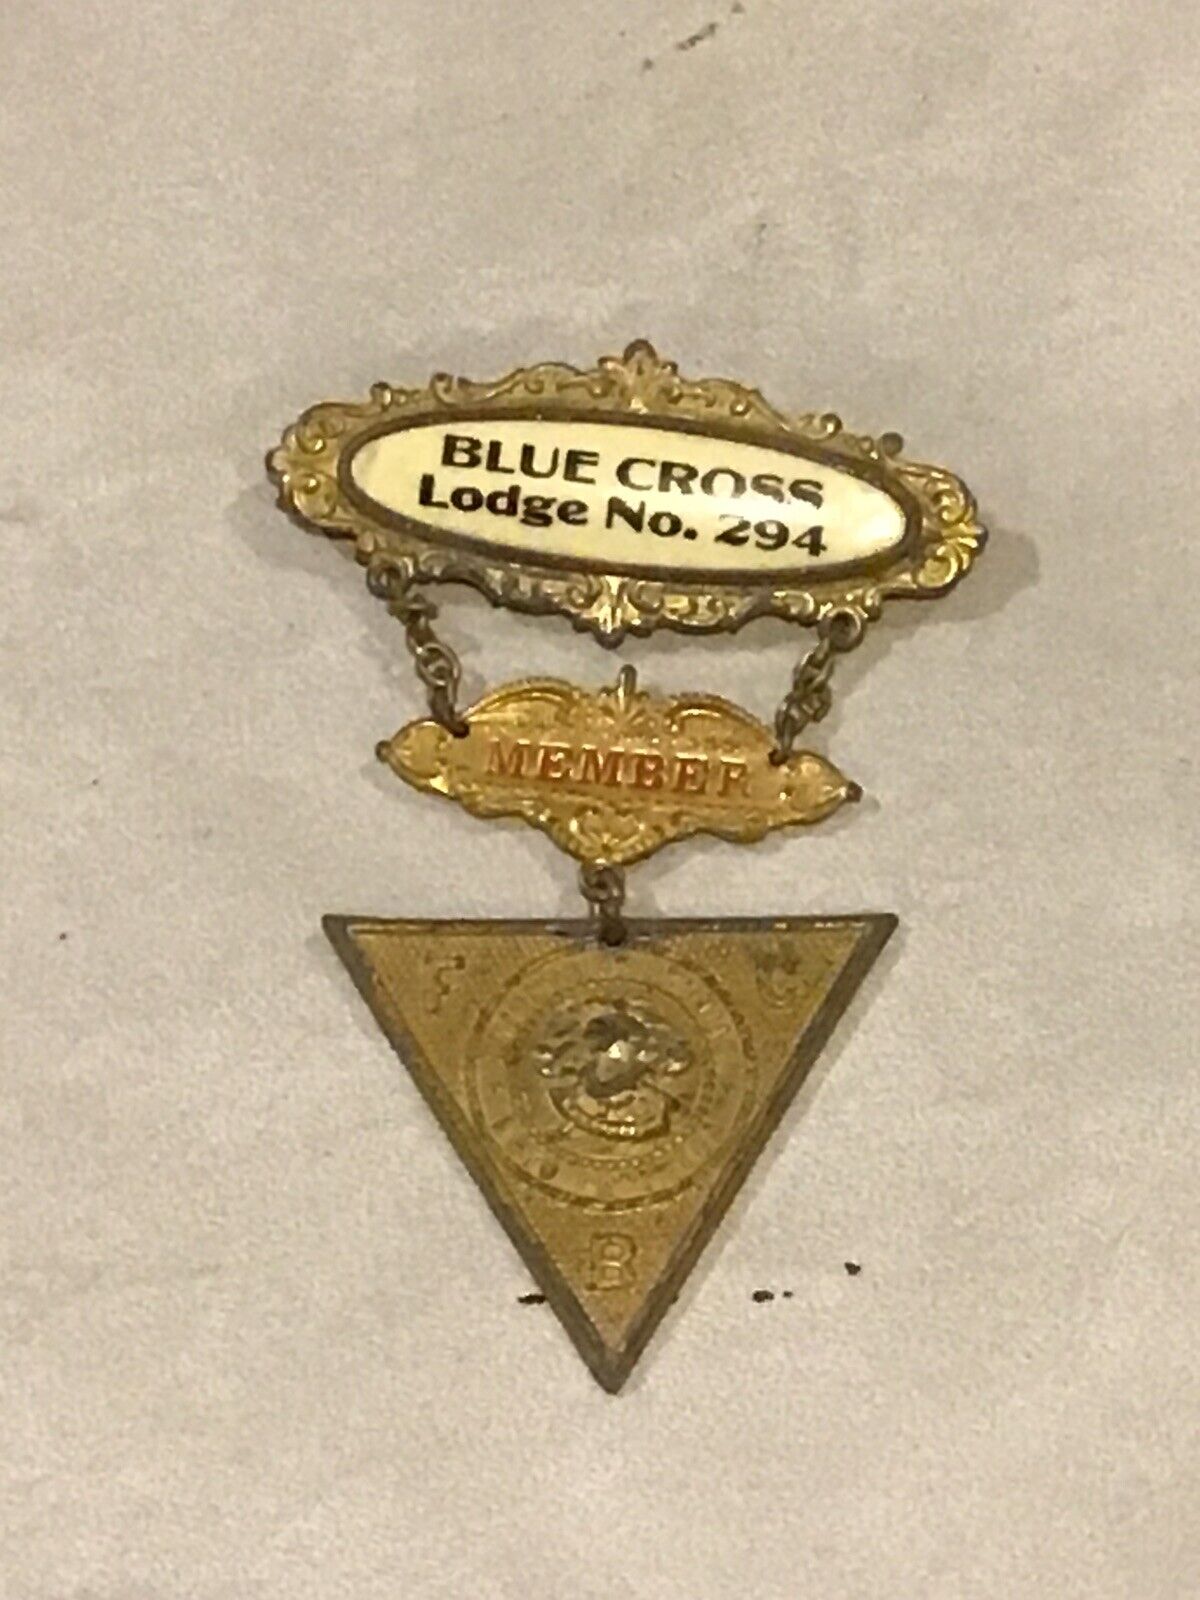 Vintage Knights Of Pythias Member Blue Cross Lodge No. 294 Badge Pin M.C. Lilley